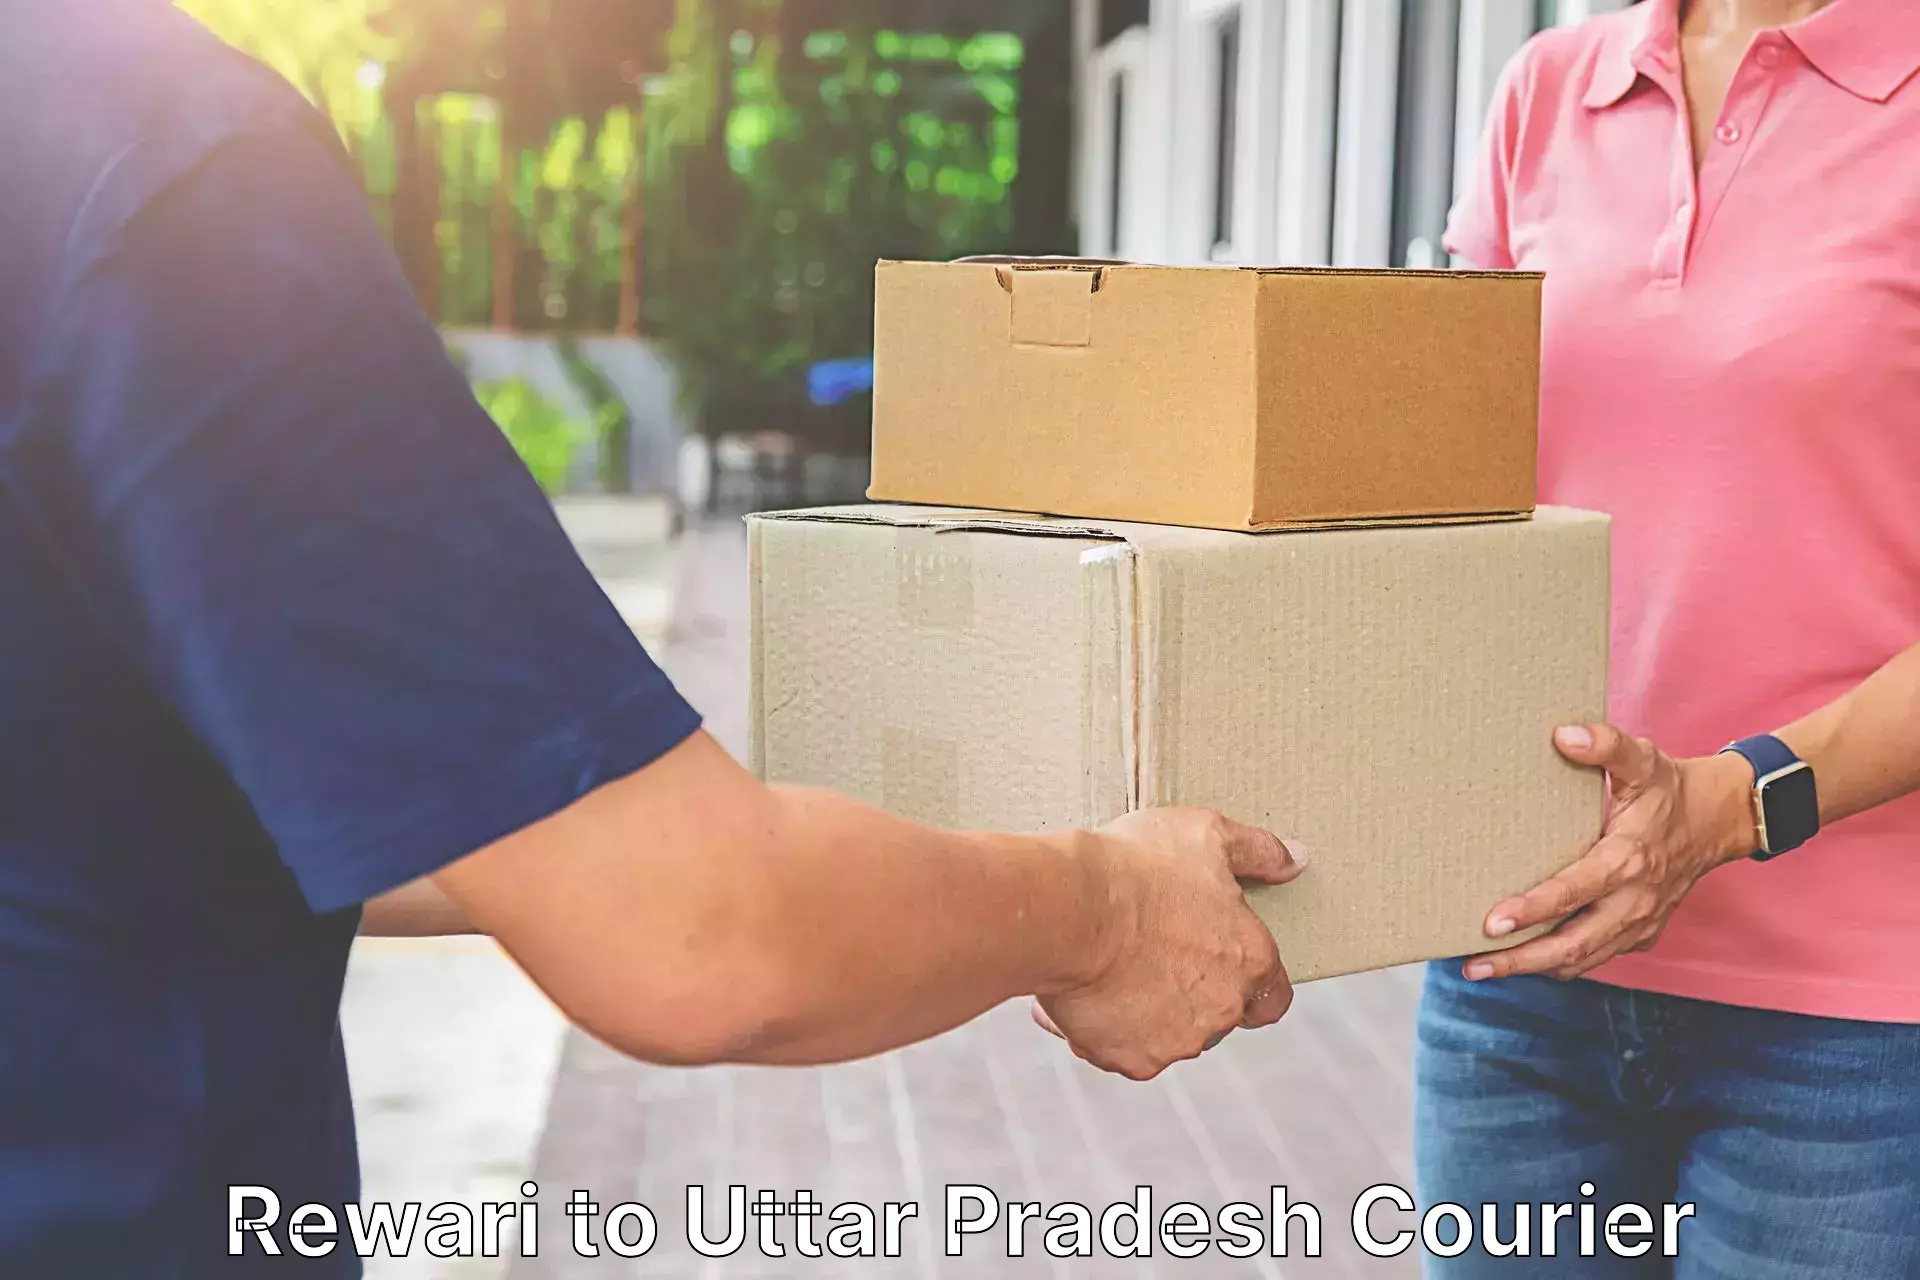 Courier service partnerships in Rewari to Dullahpur